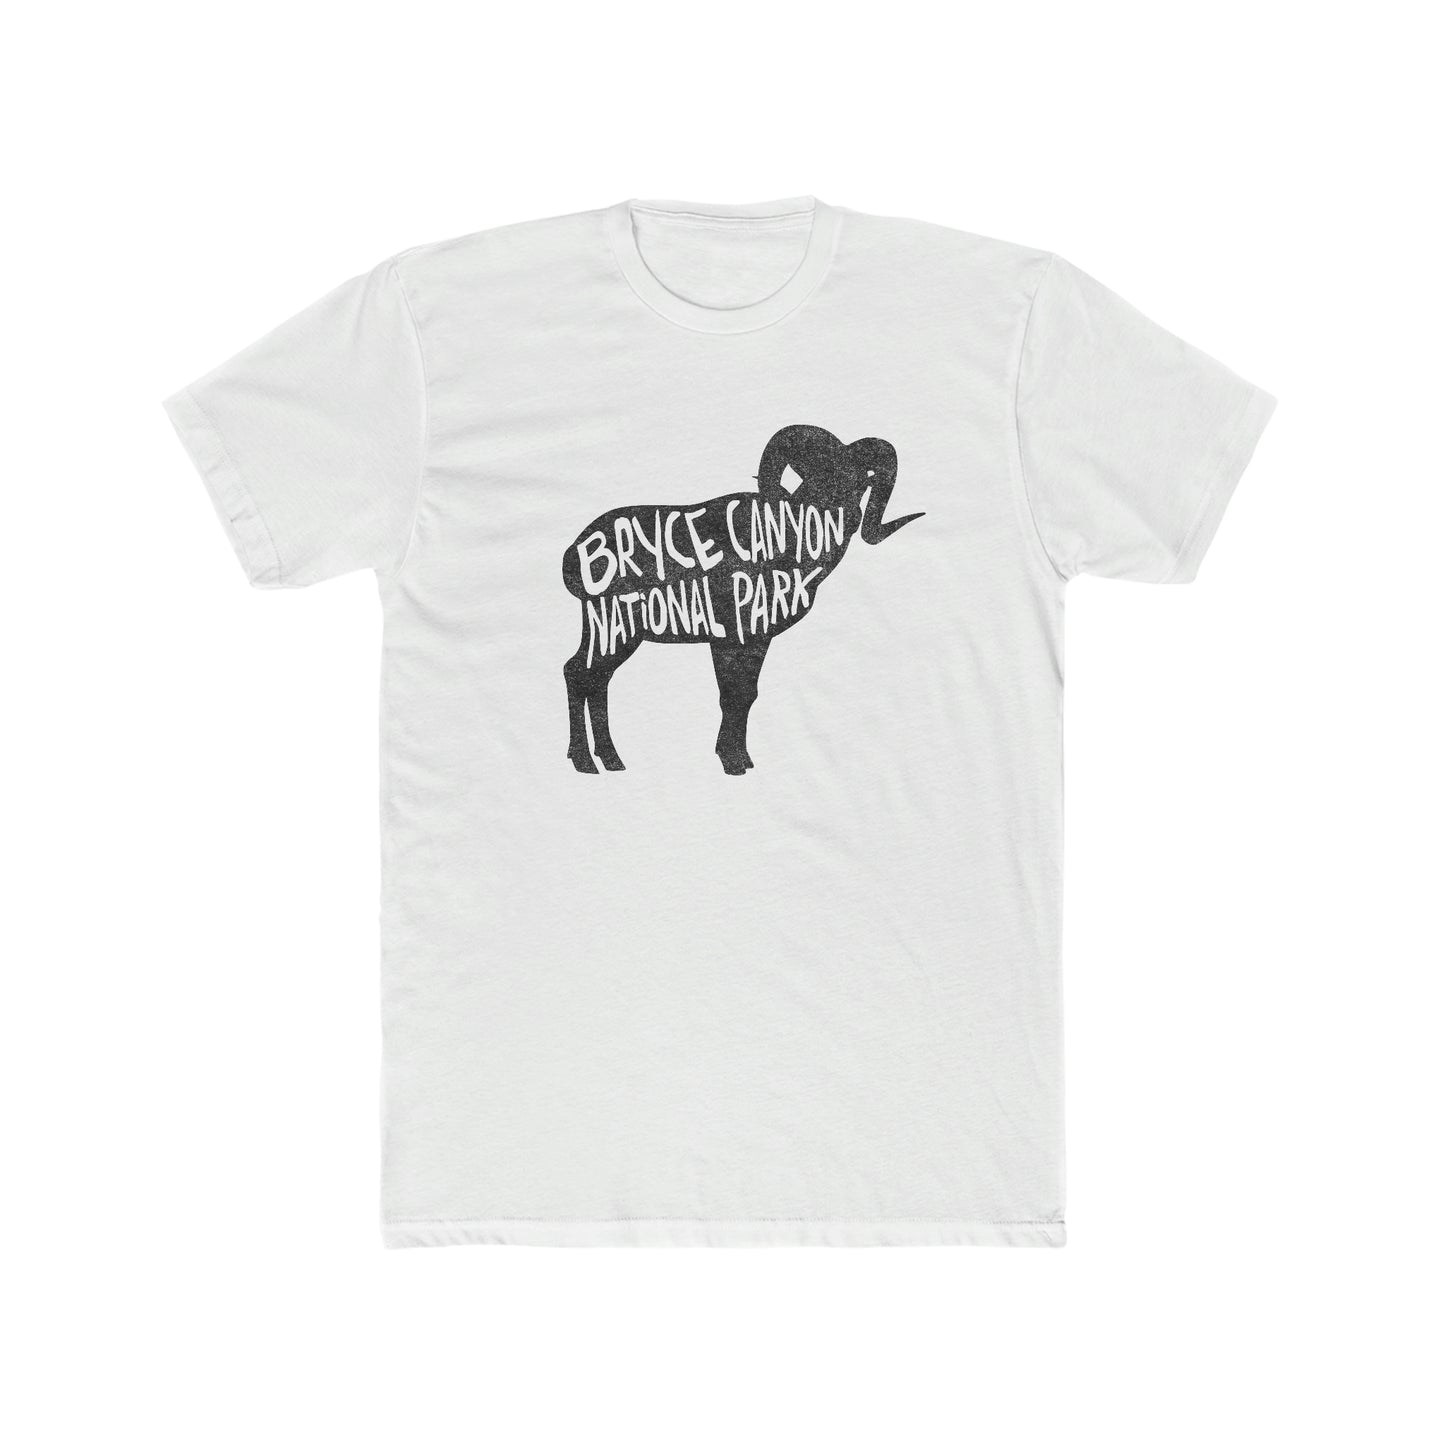 Bryce Canyon National Park T-Shirt - Bighorn Sheep